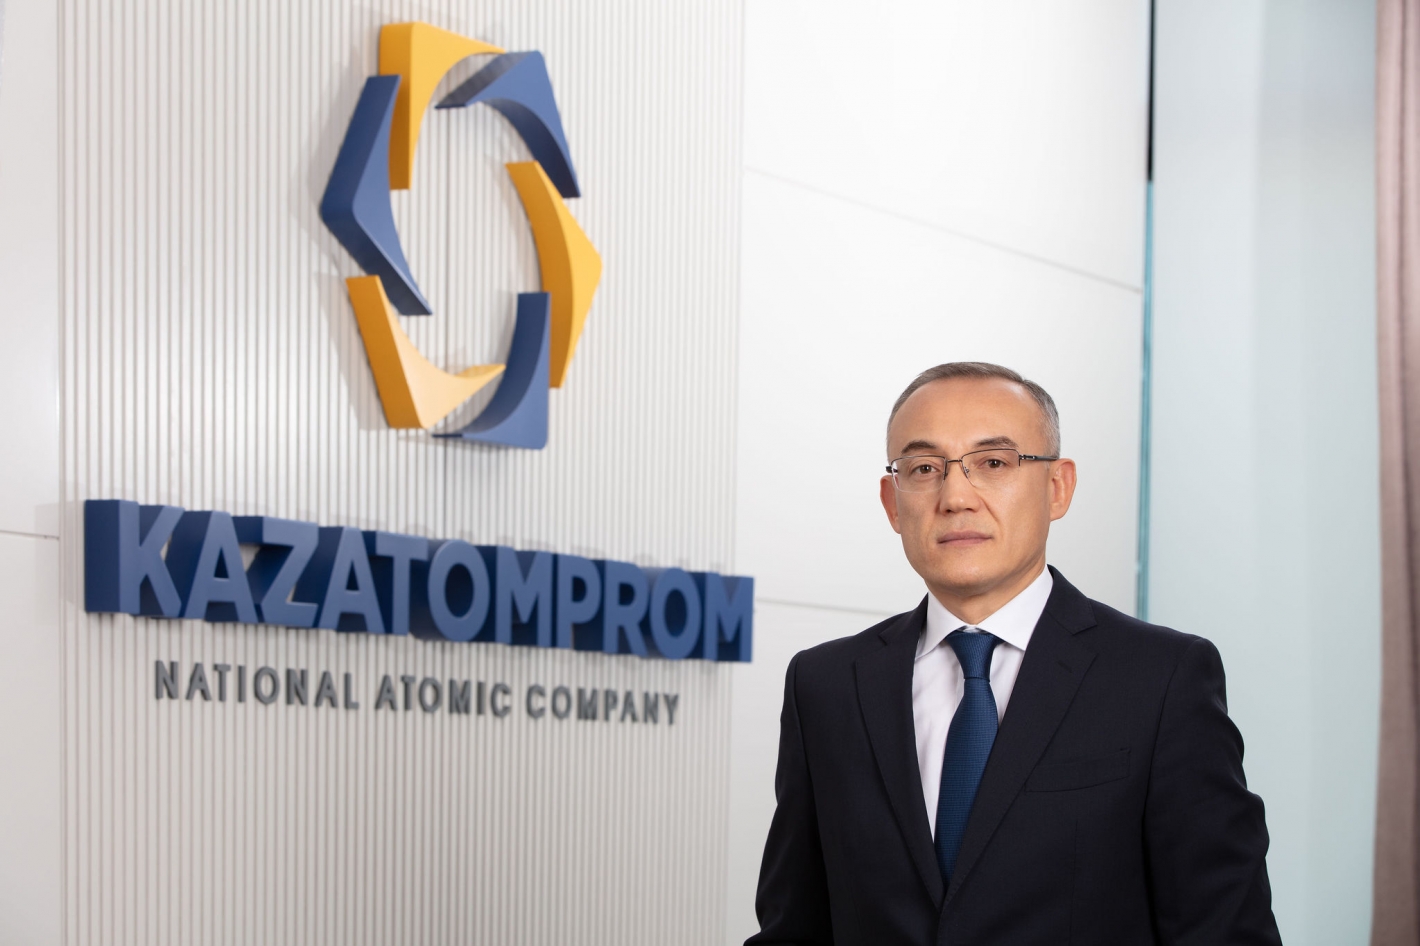 Interview with Galymzhan Pirmatov, CEO of Kazatomprom, in Kazakhstanskaya Pravda newspaper